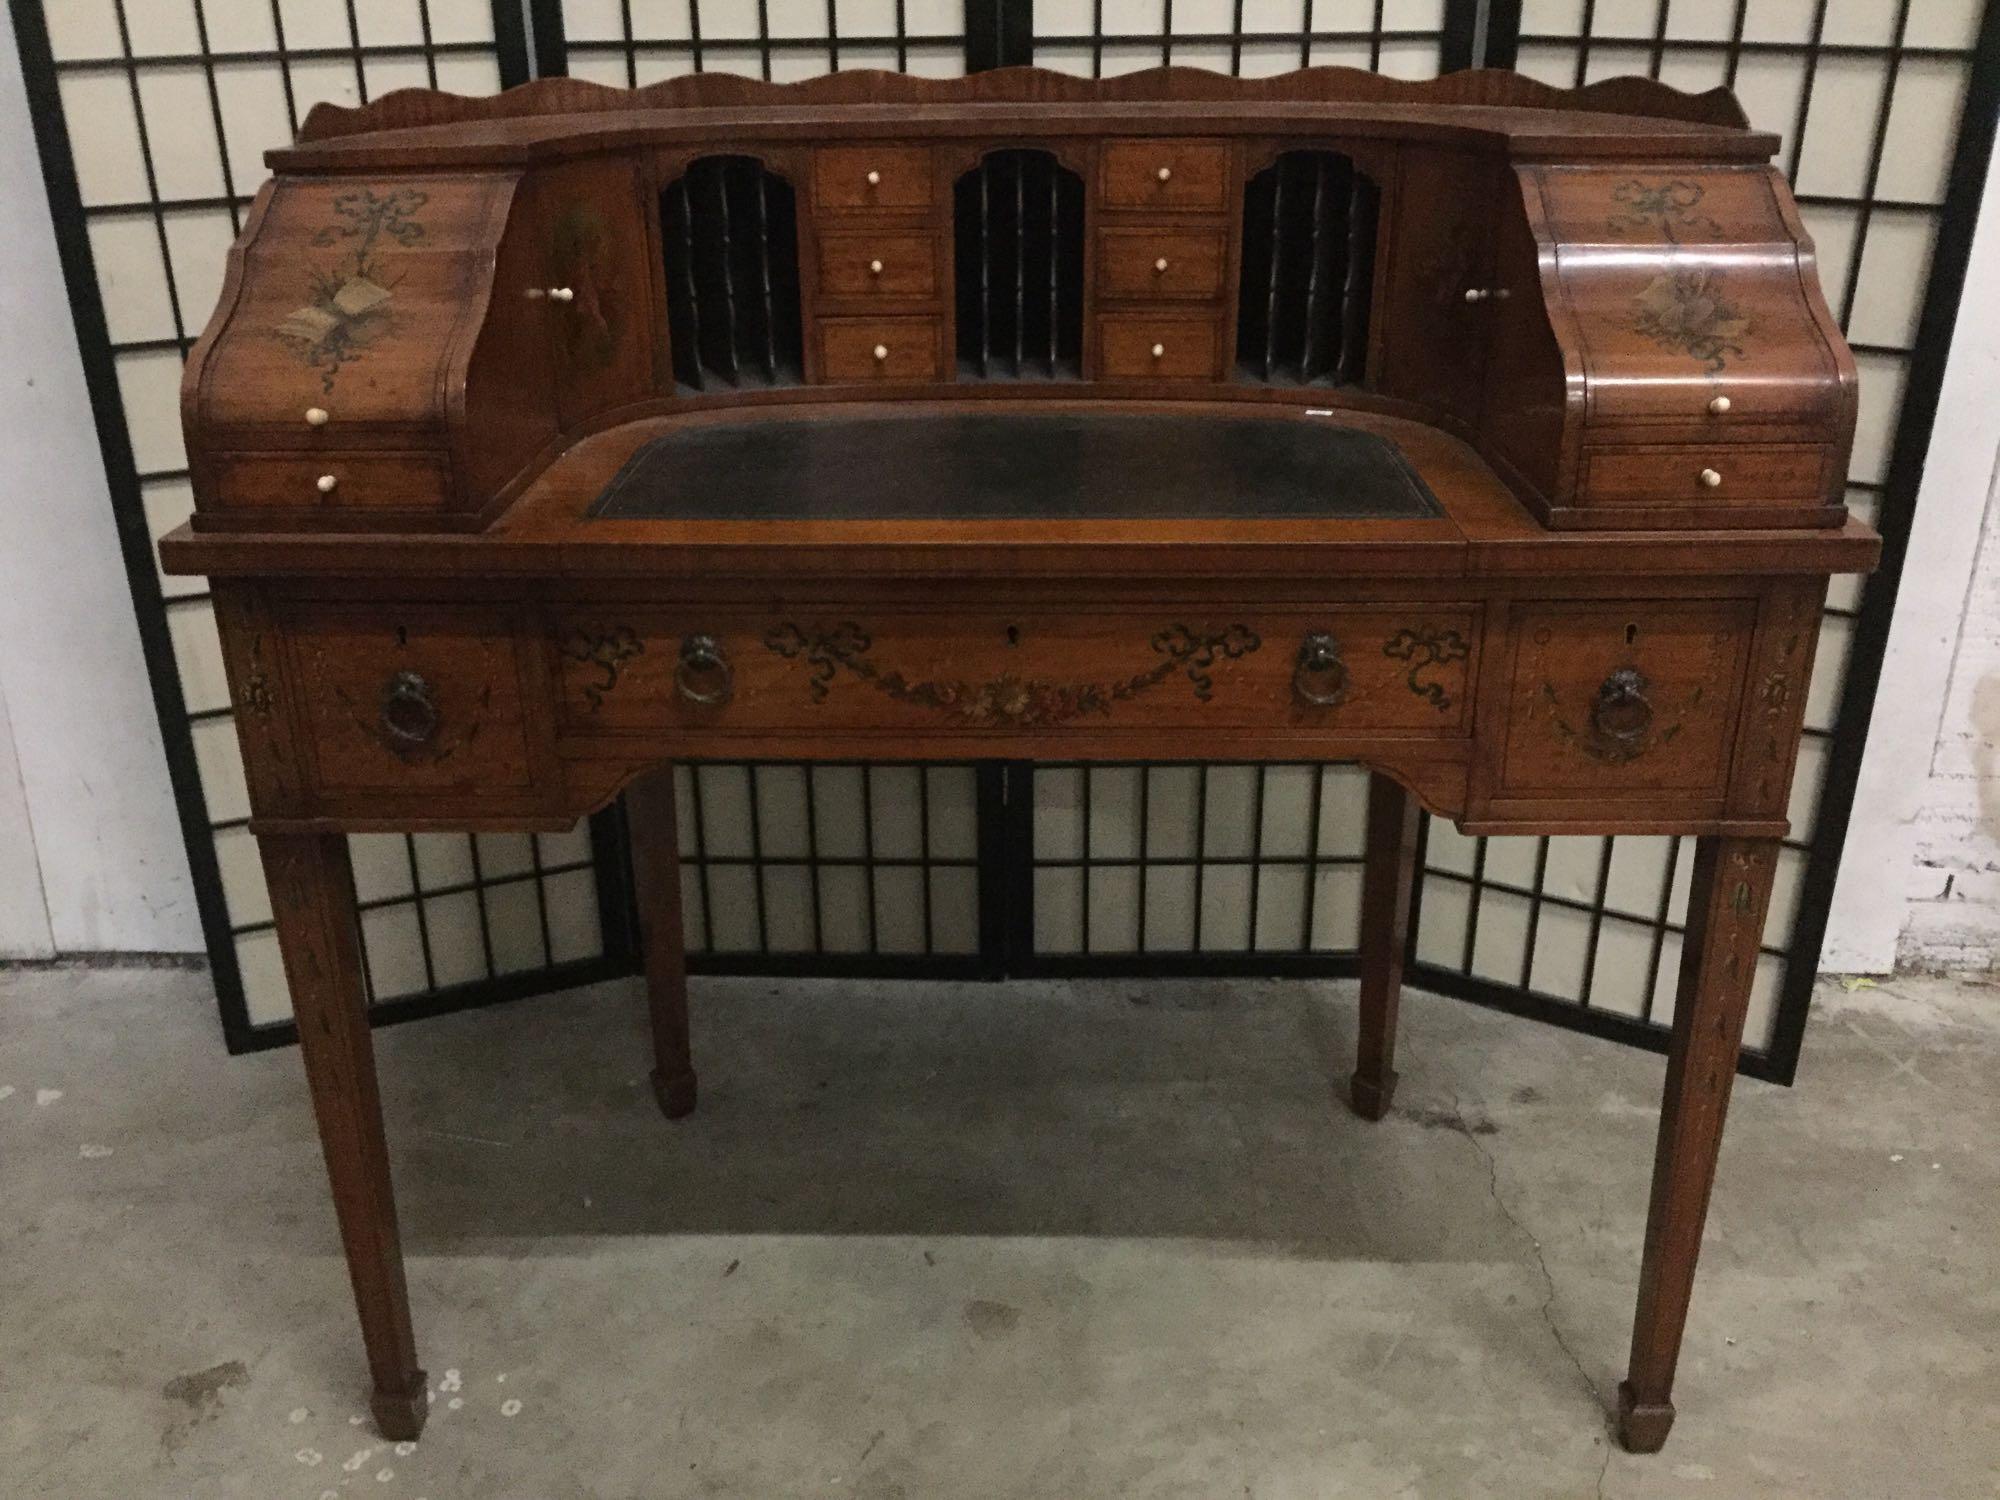 English 1908 Edwardian Adams style eleven drawer wooden desk w/ cherub/floral design